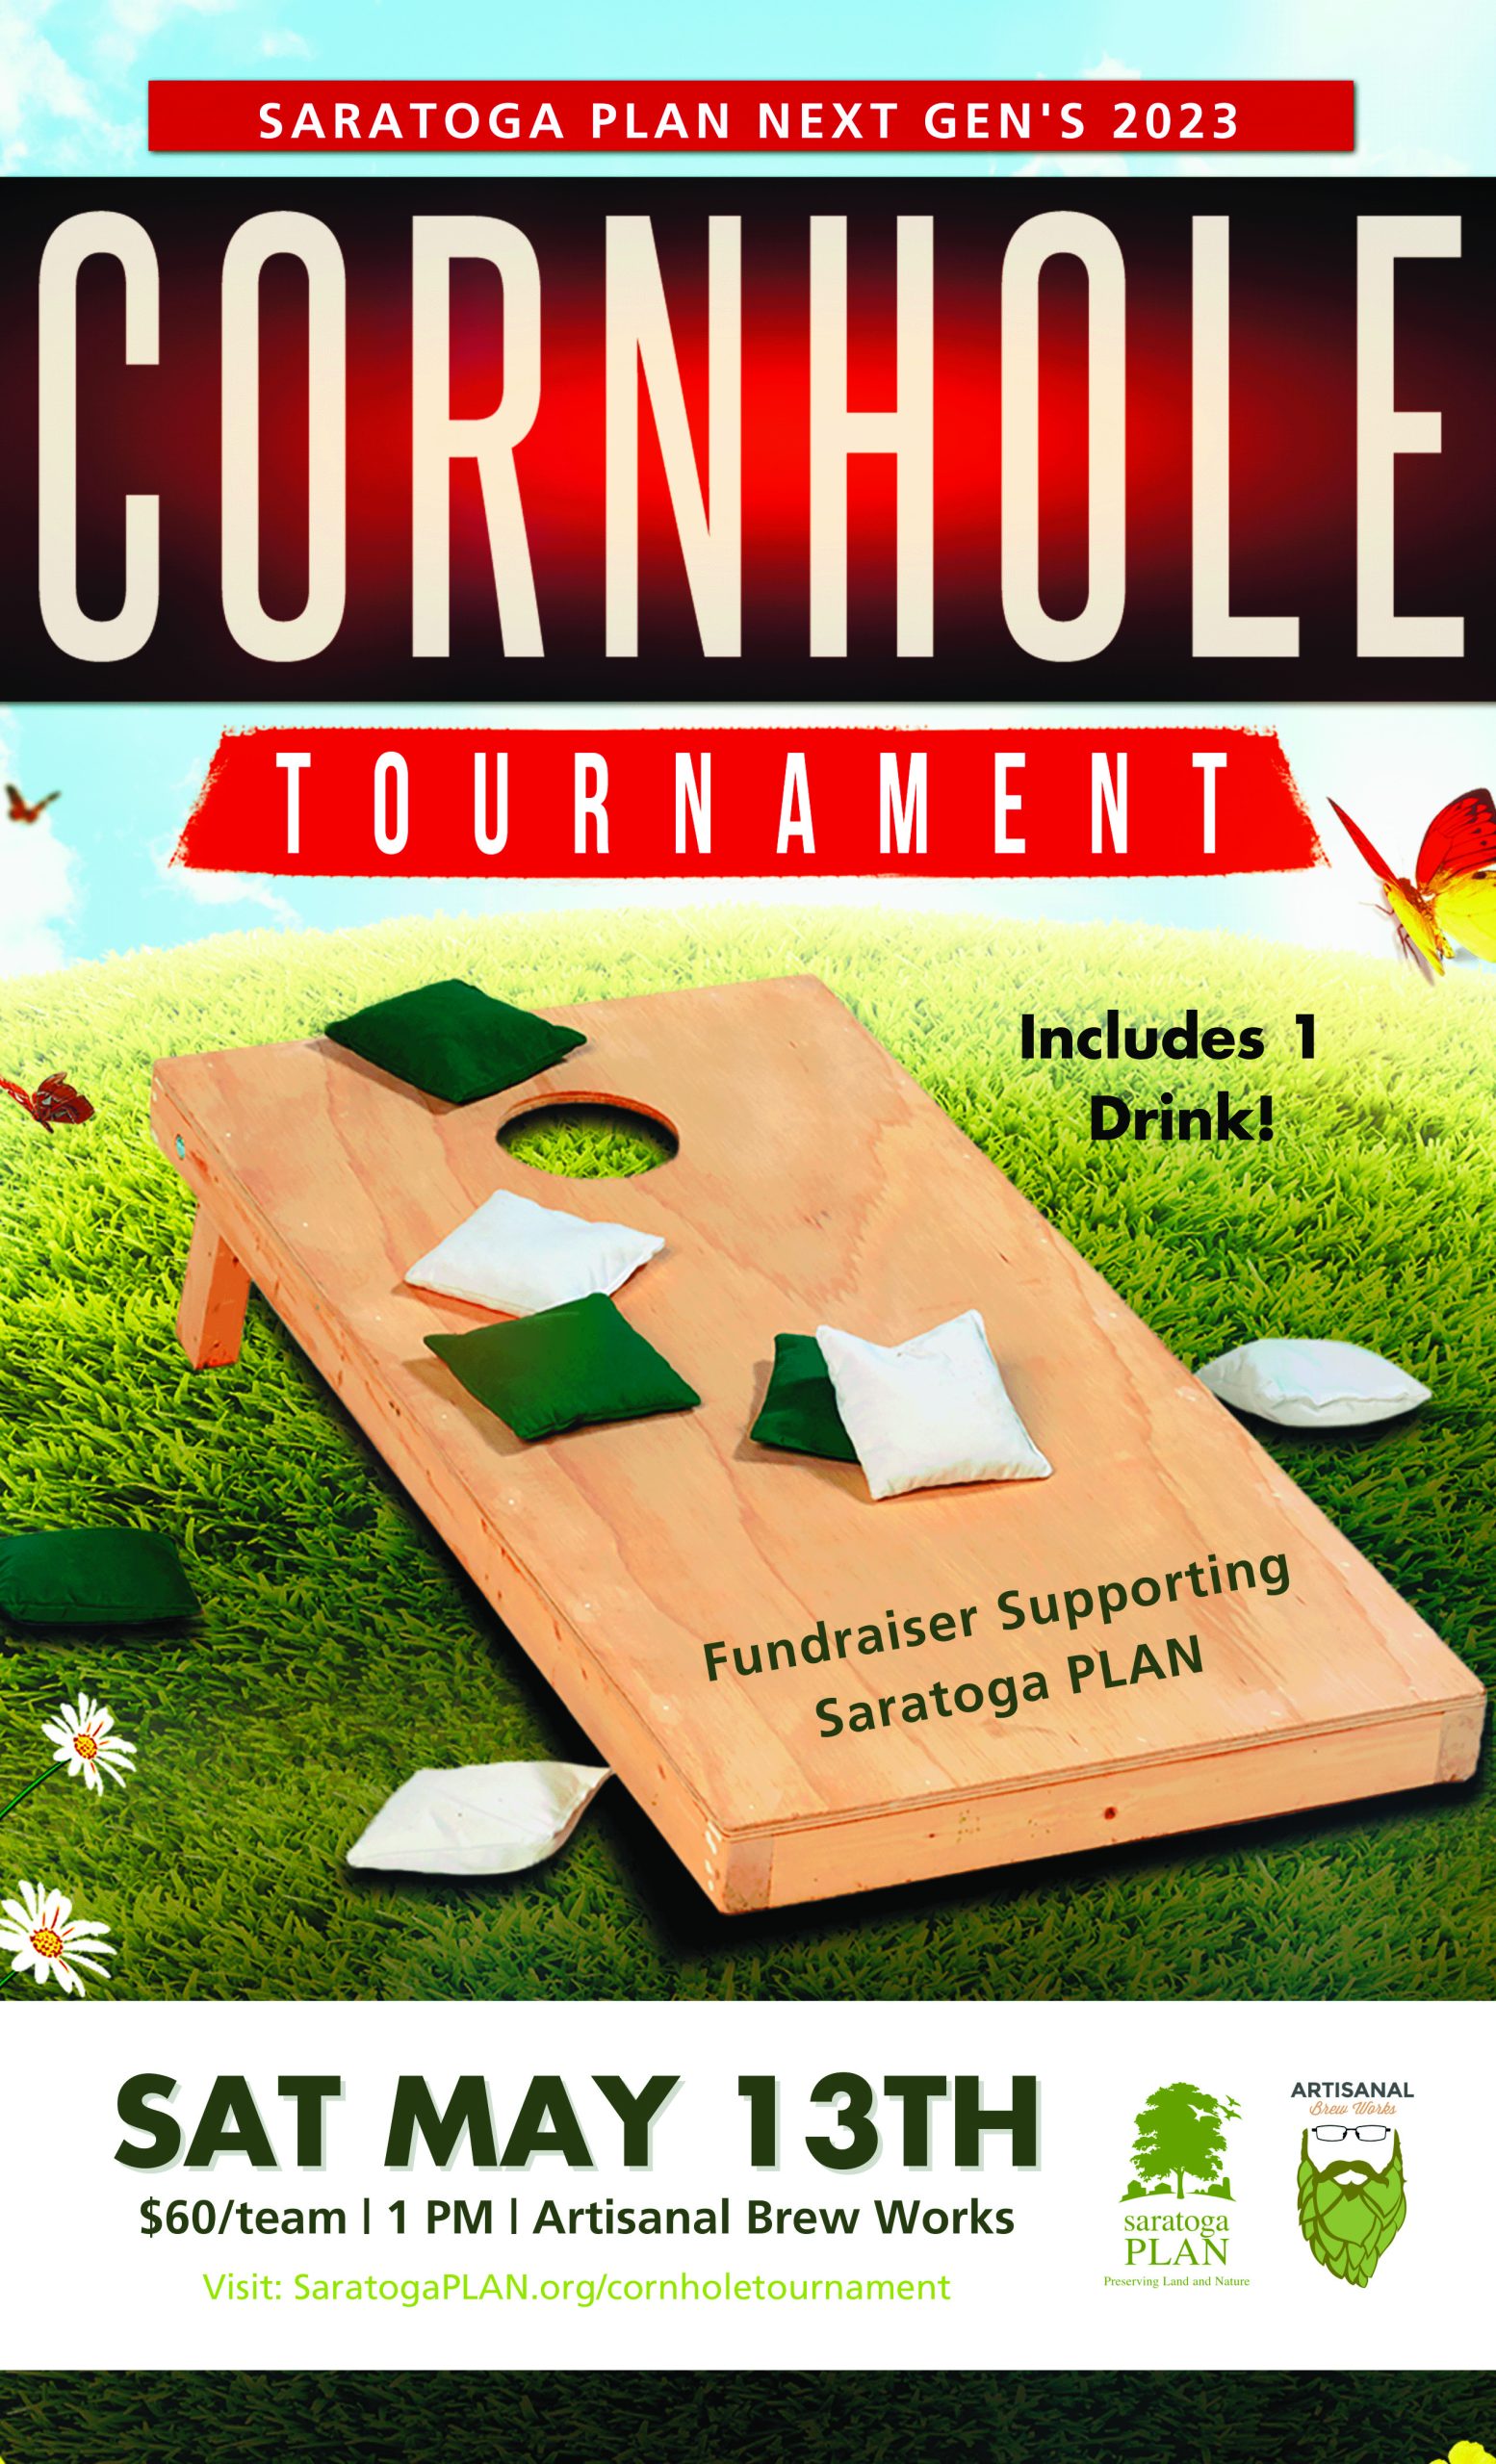 Next Gen's Cornhole Tournament Benefitting Saratoga PLAN